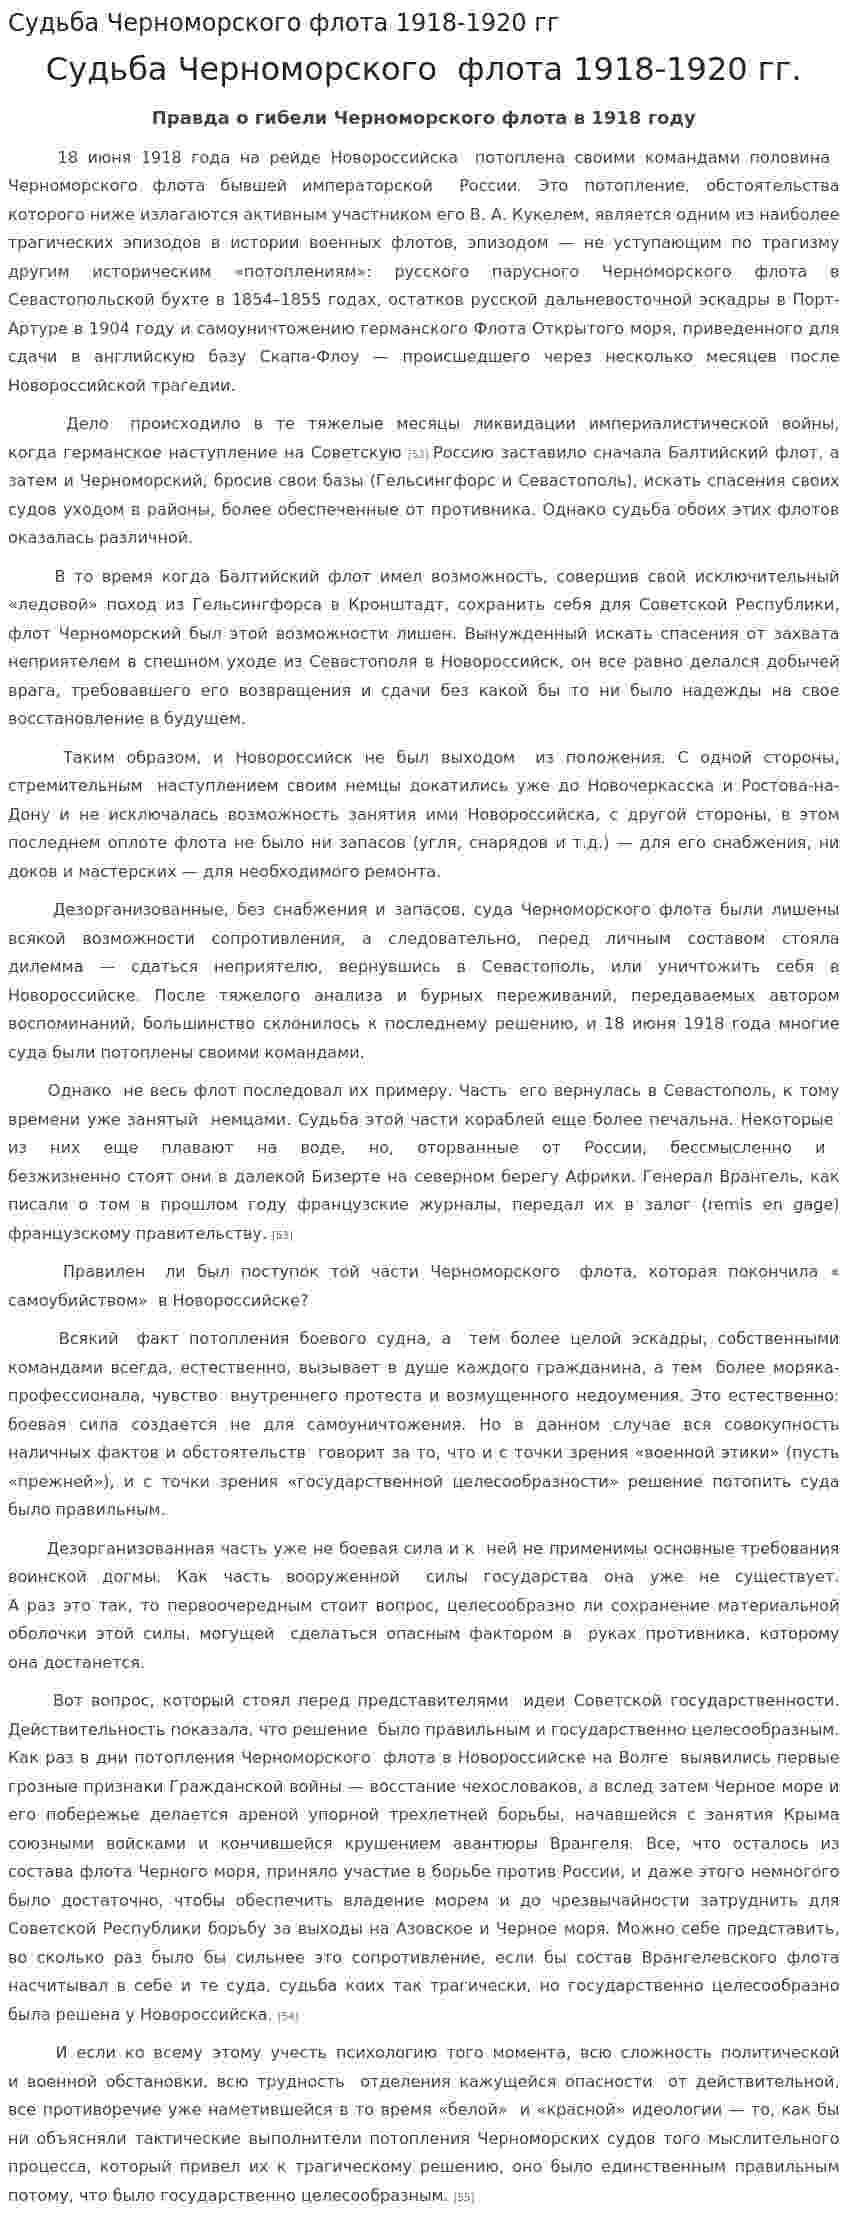 Судьба Черноморского флота 1918-1920 гг